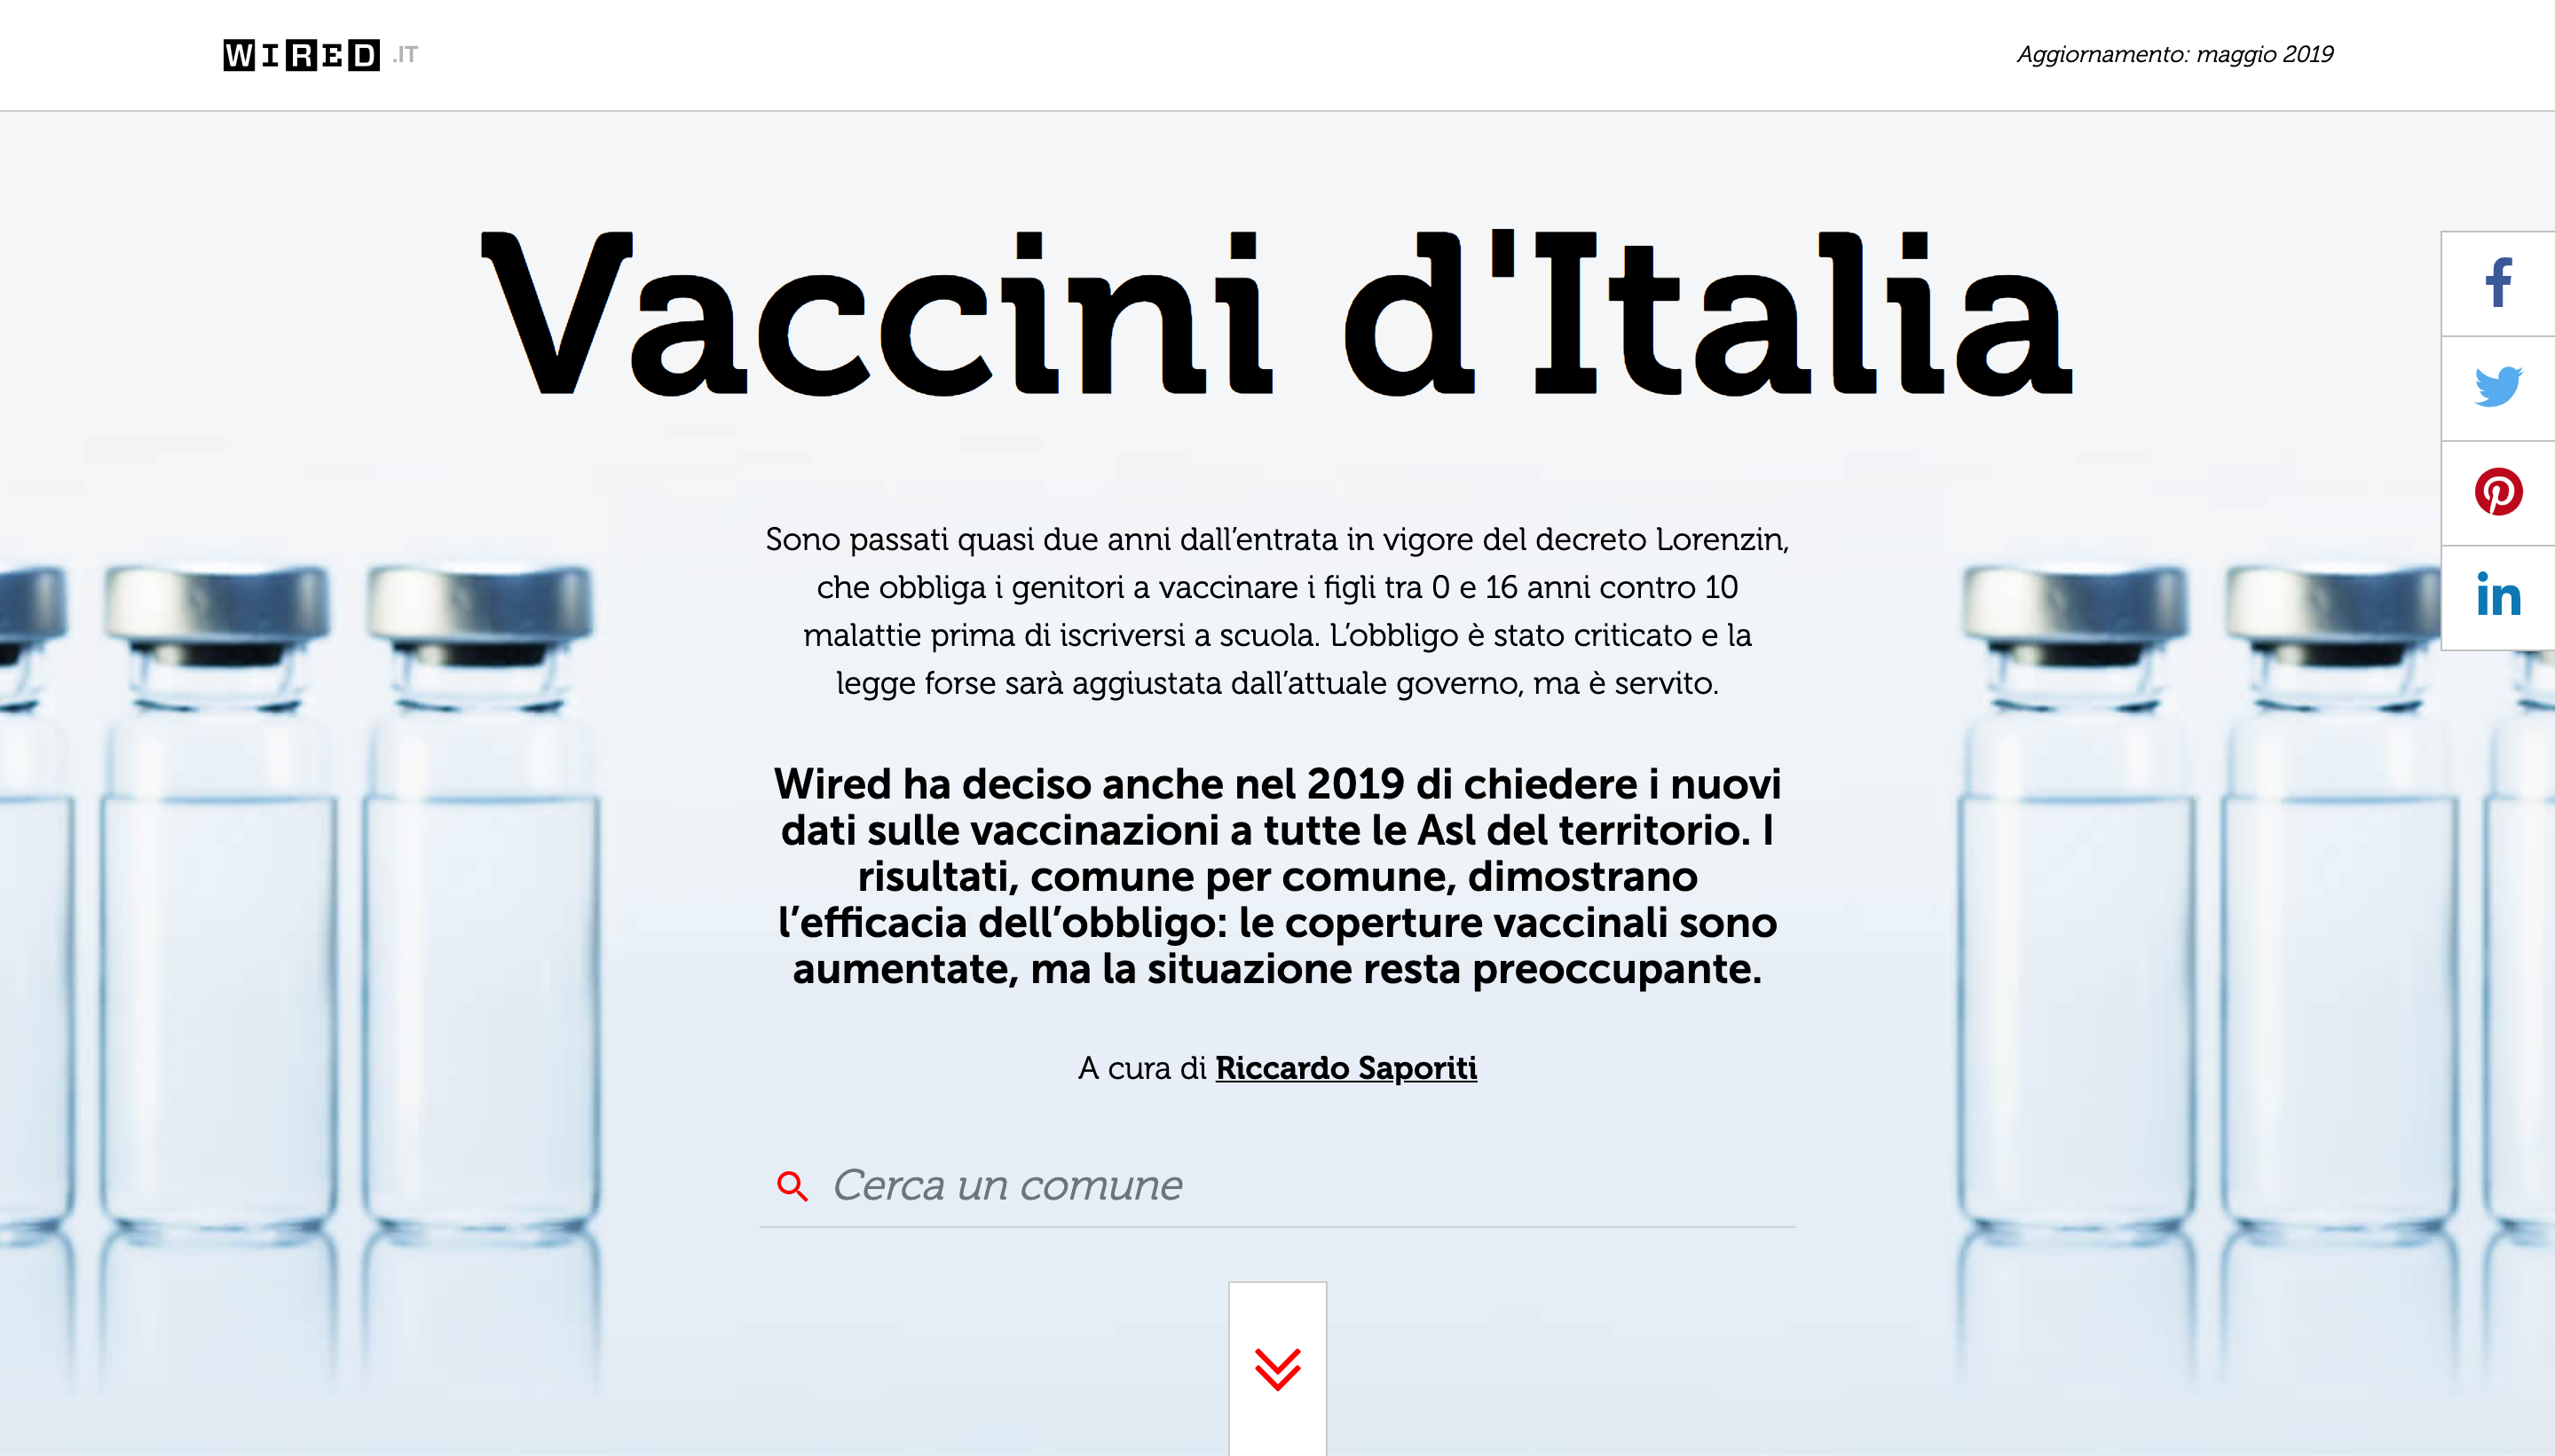 WIRED Vaccini d'Italia Website